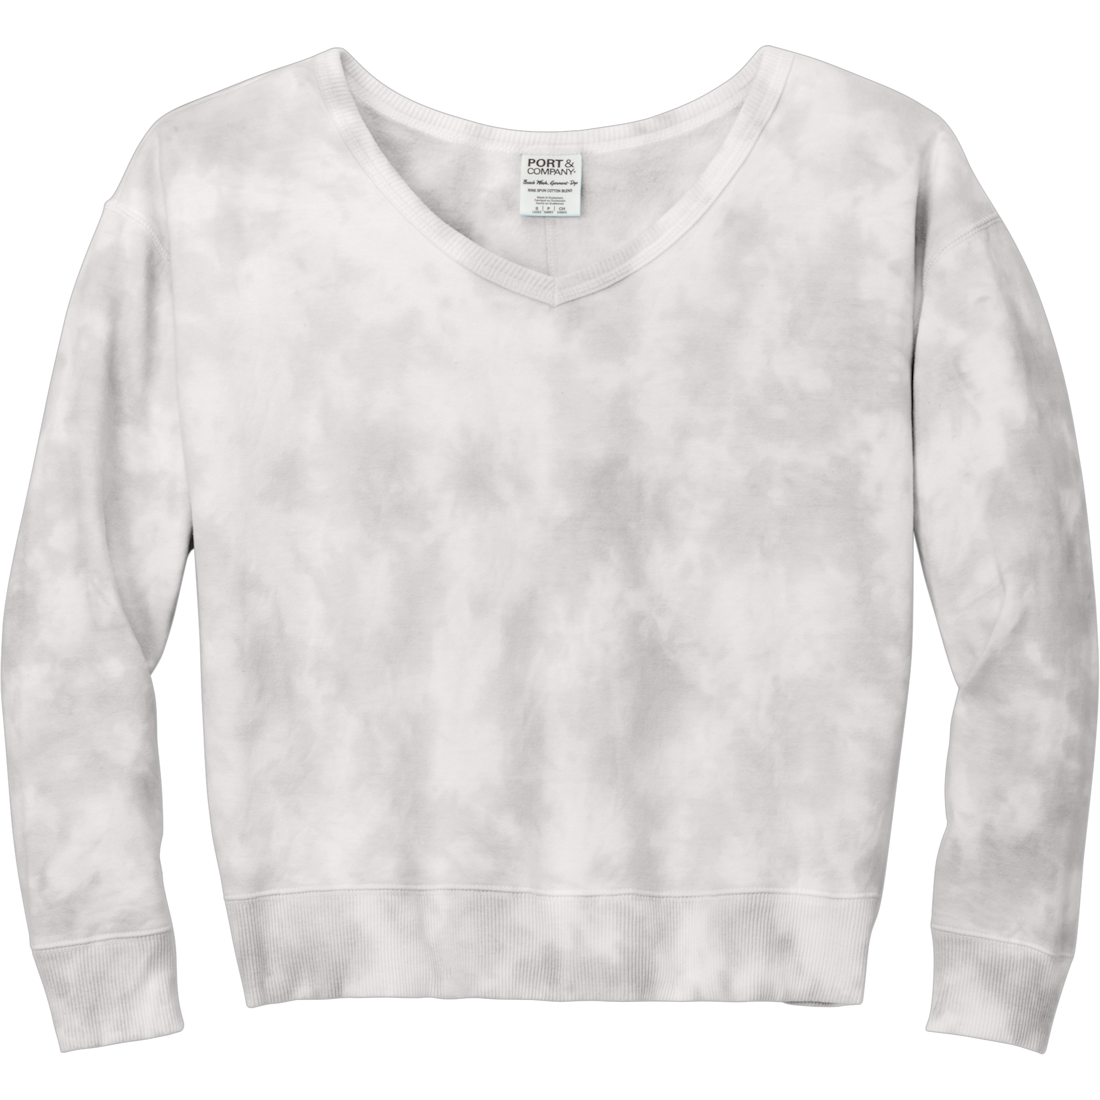 Cloud Tie-Dye V-Neck Sweatshirt (Dove Gray)